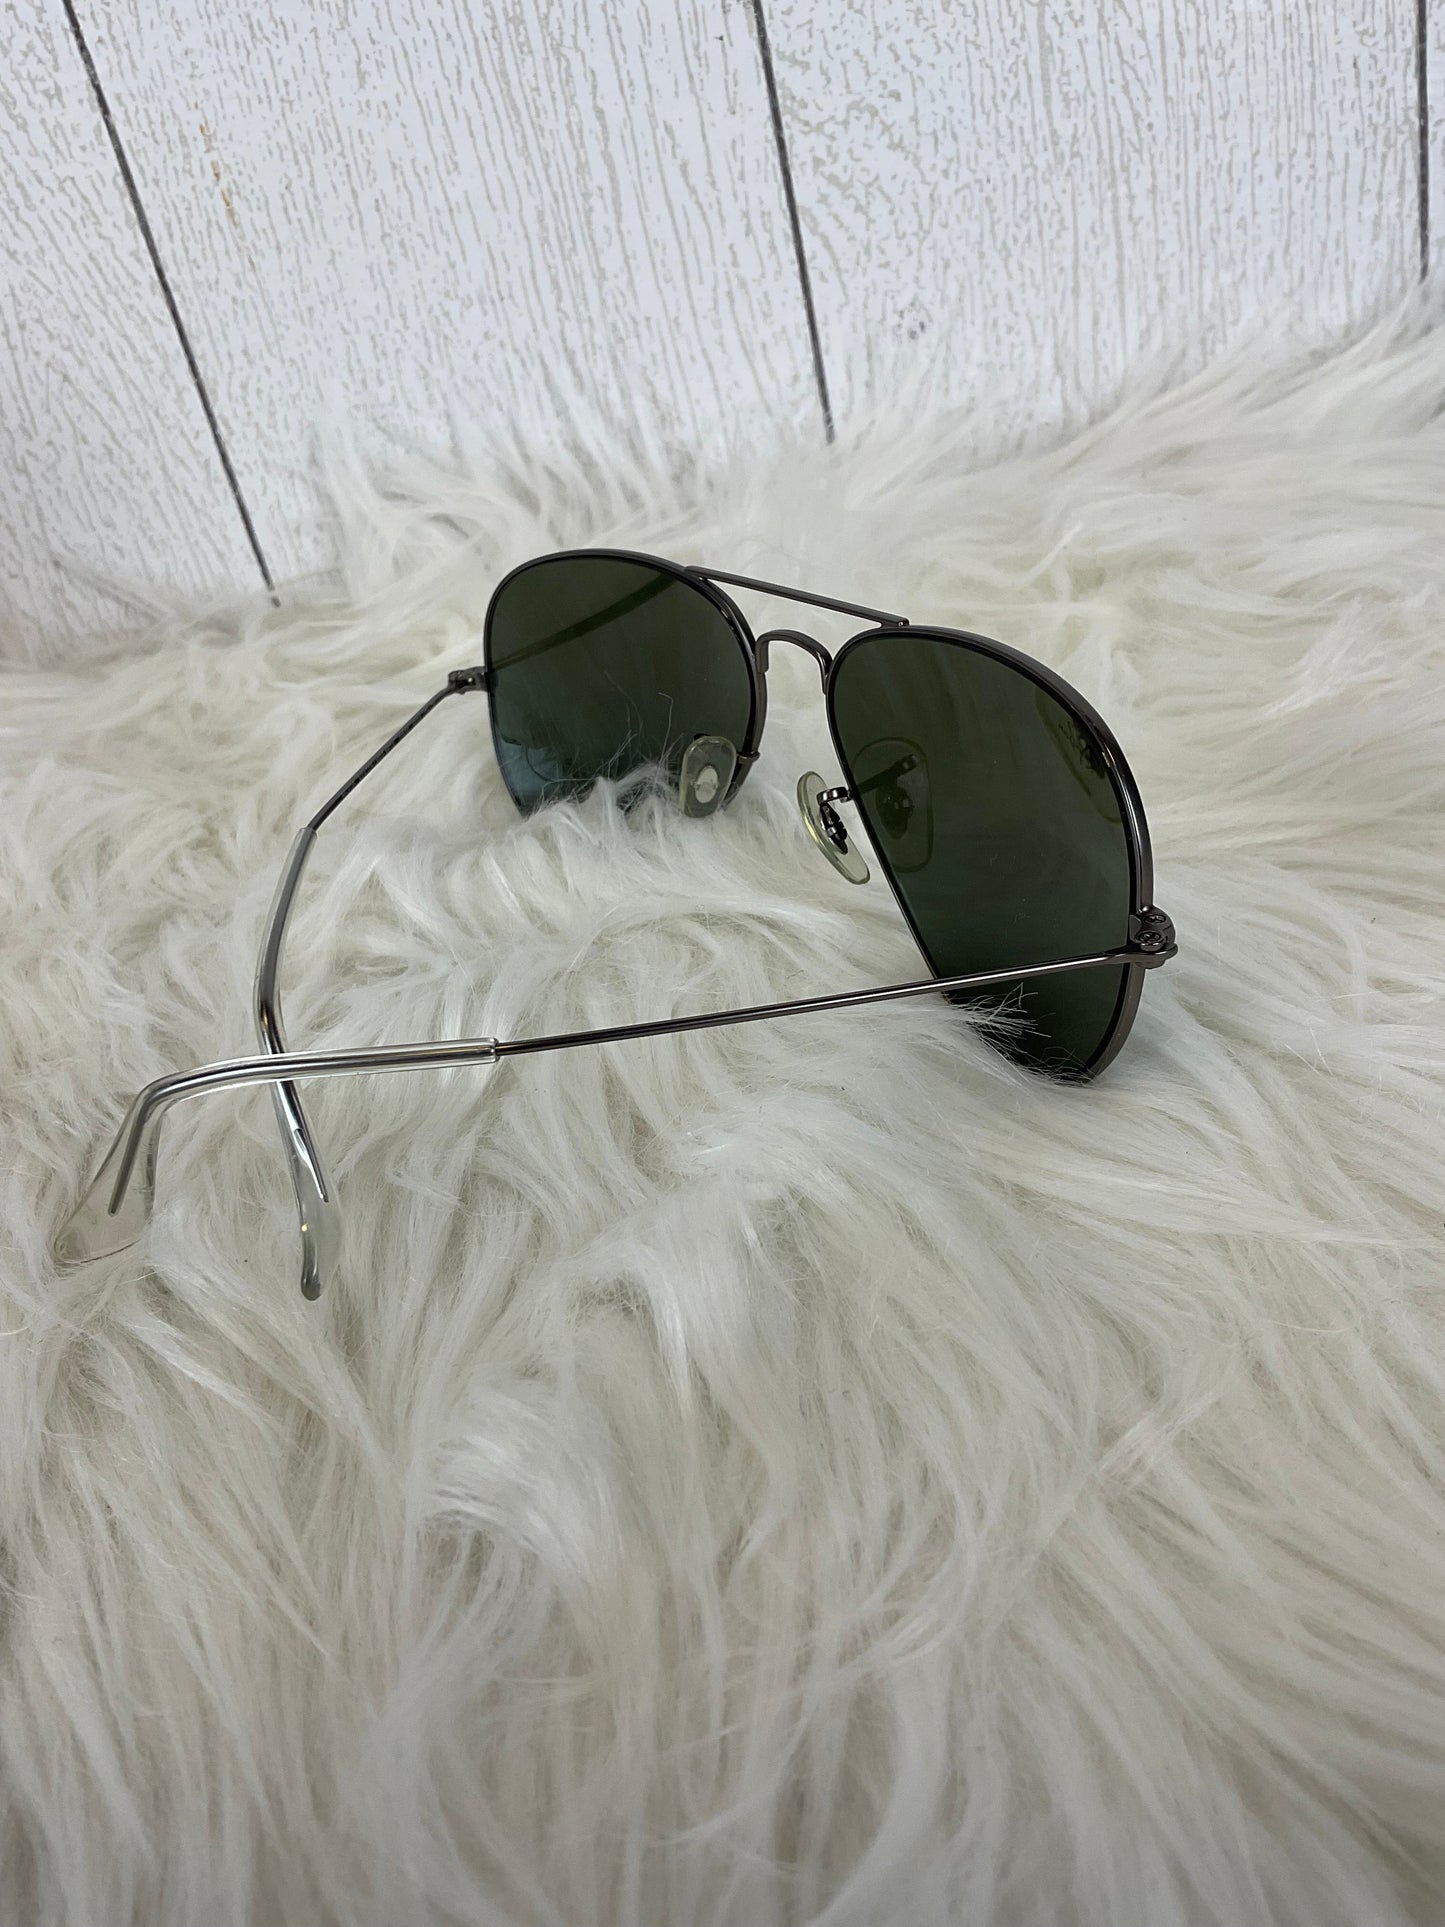 Sunglasses Designer Ray Ban, Size 01 Piece